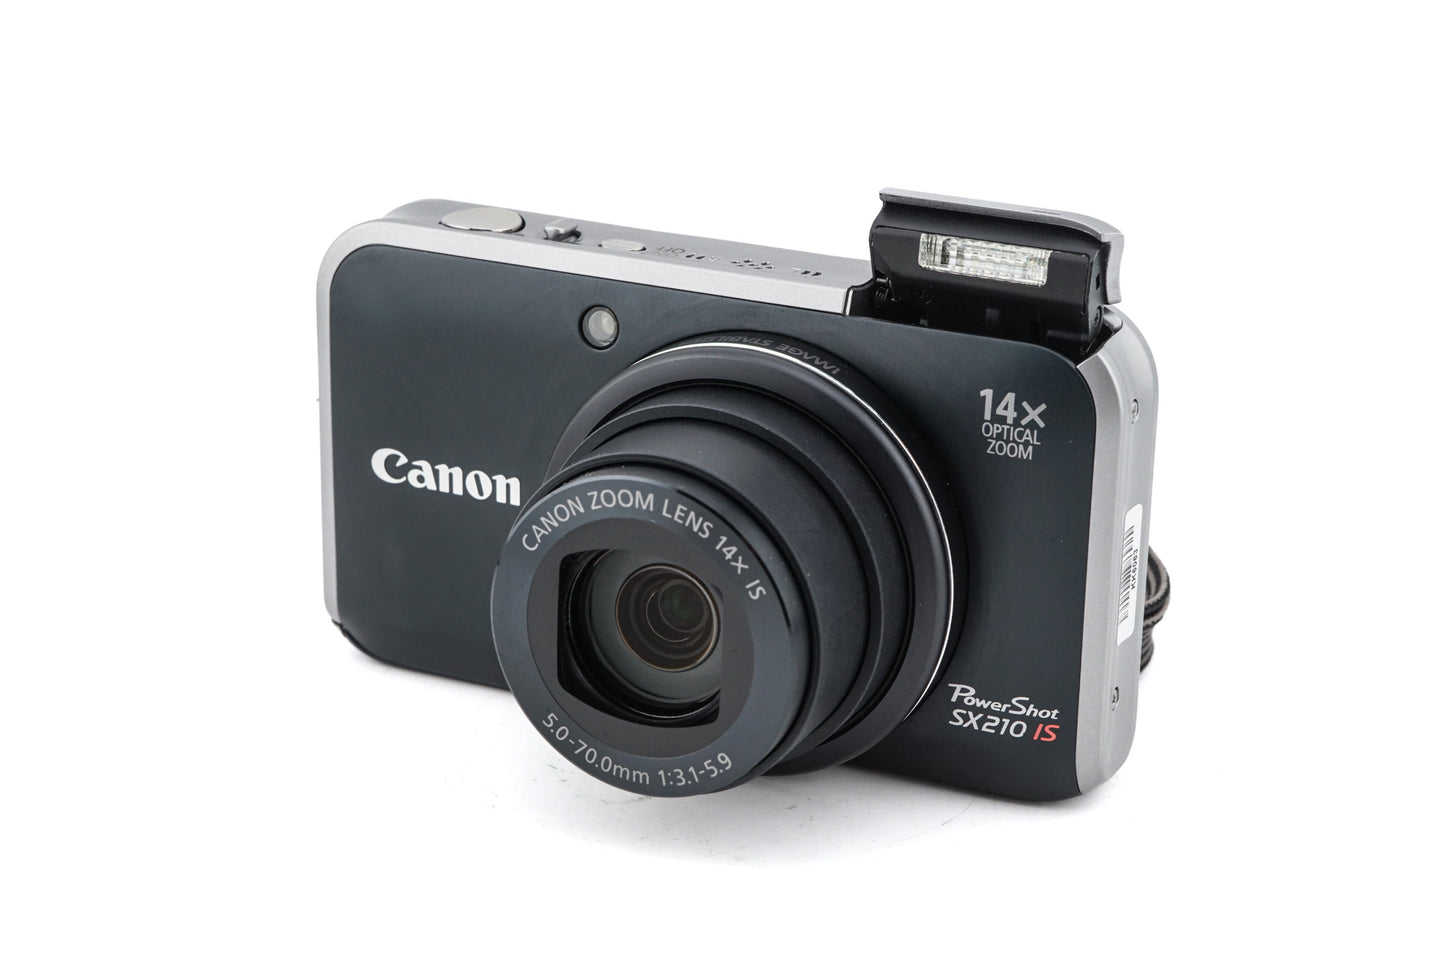 Canon PowerShot SX210 IS - Camera